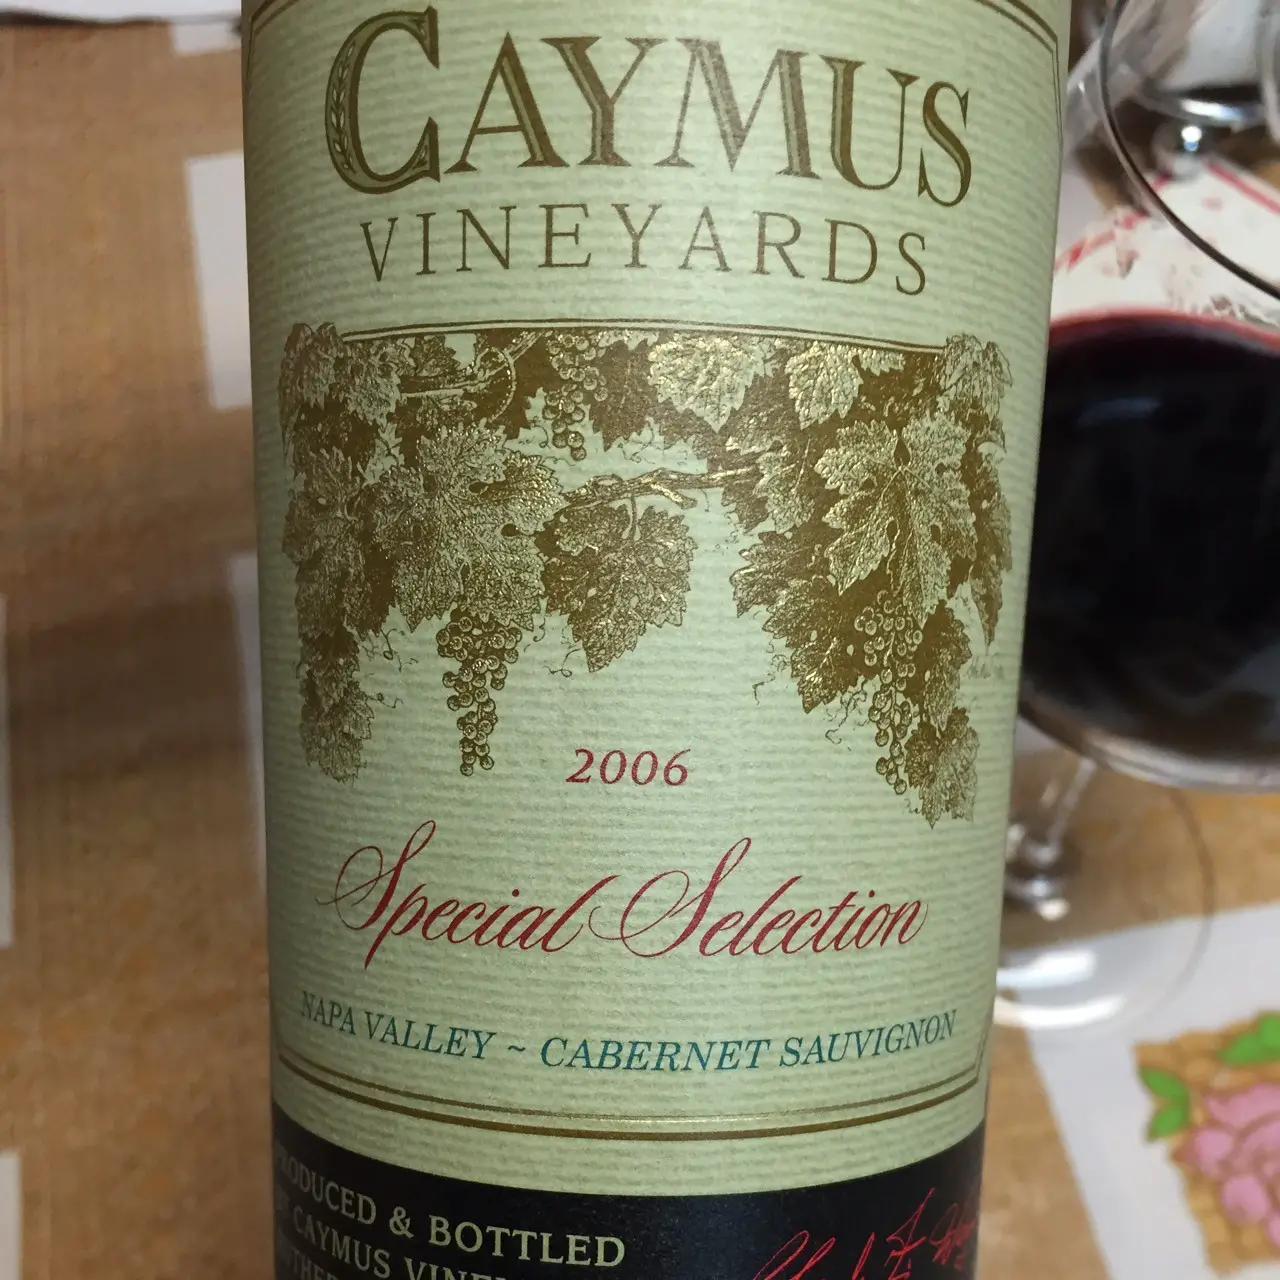 2006 Caymus Vineyards Special Selection Napa Valley Cabernet Sauvignon